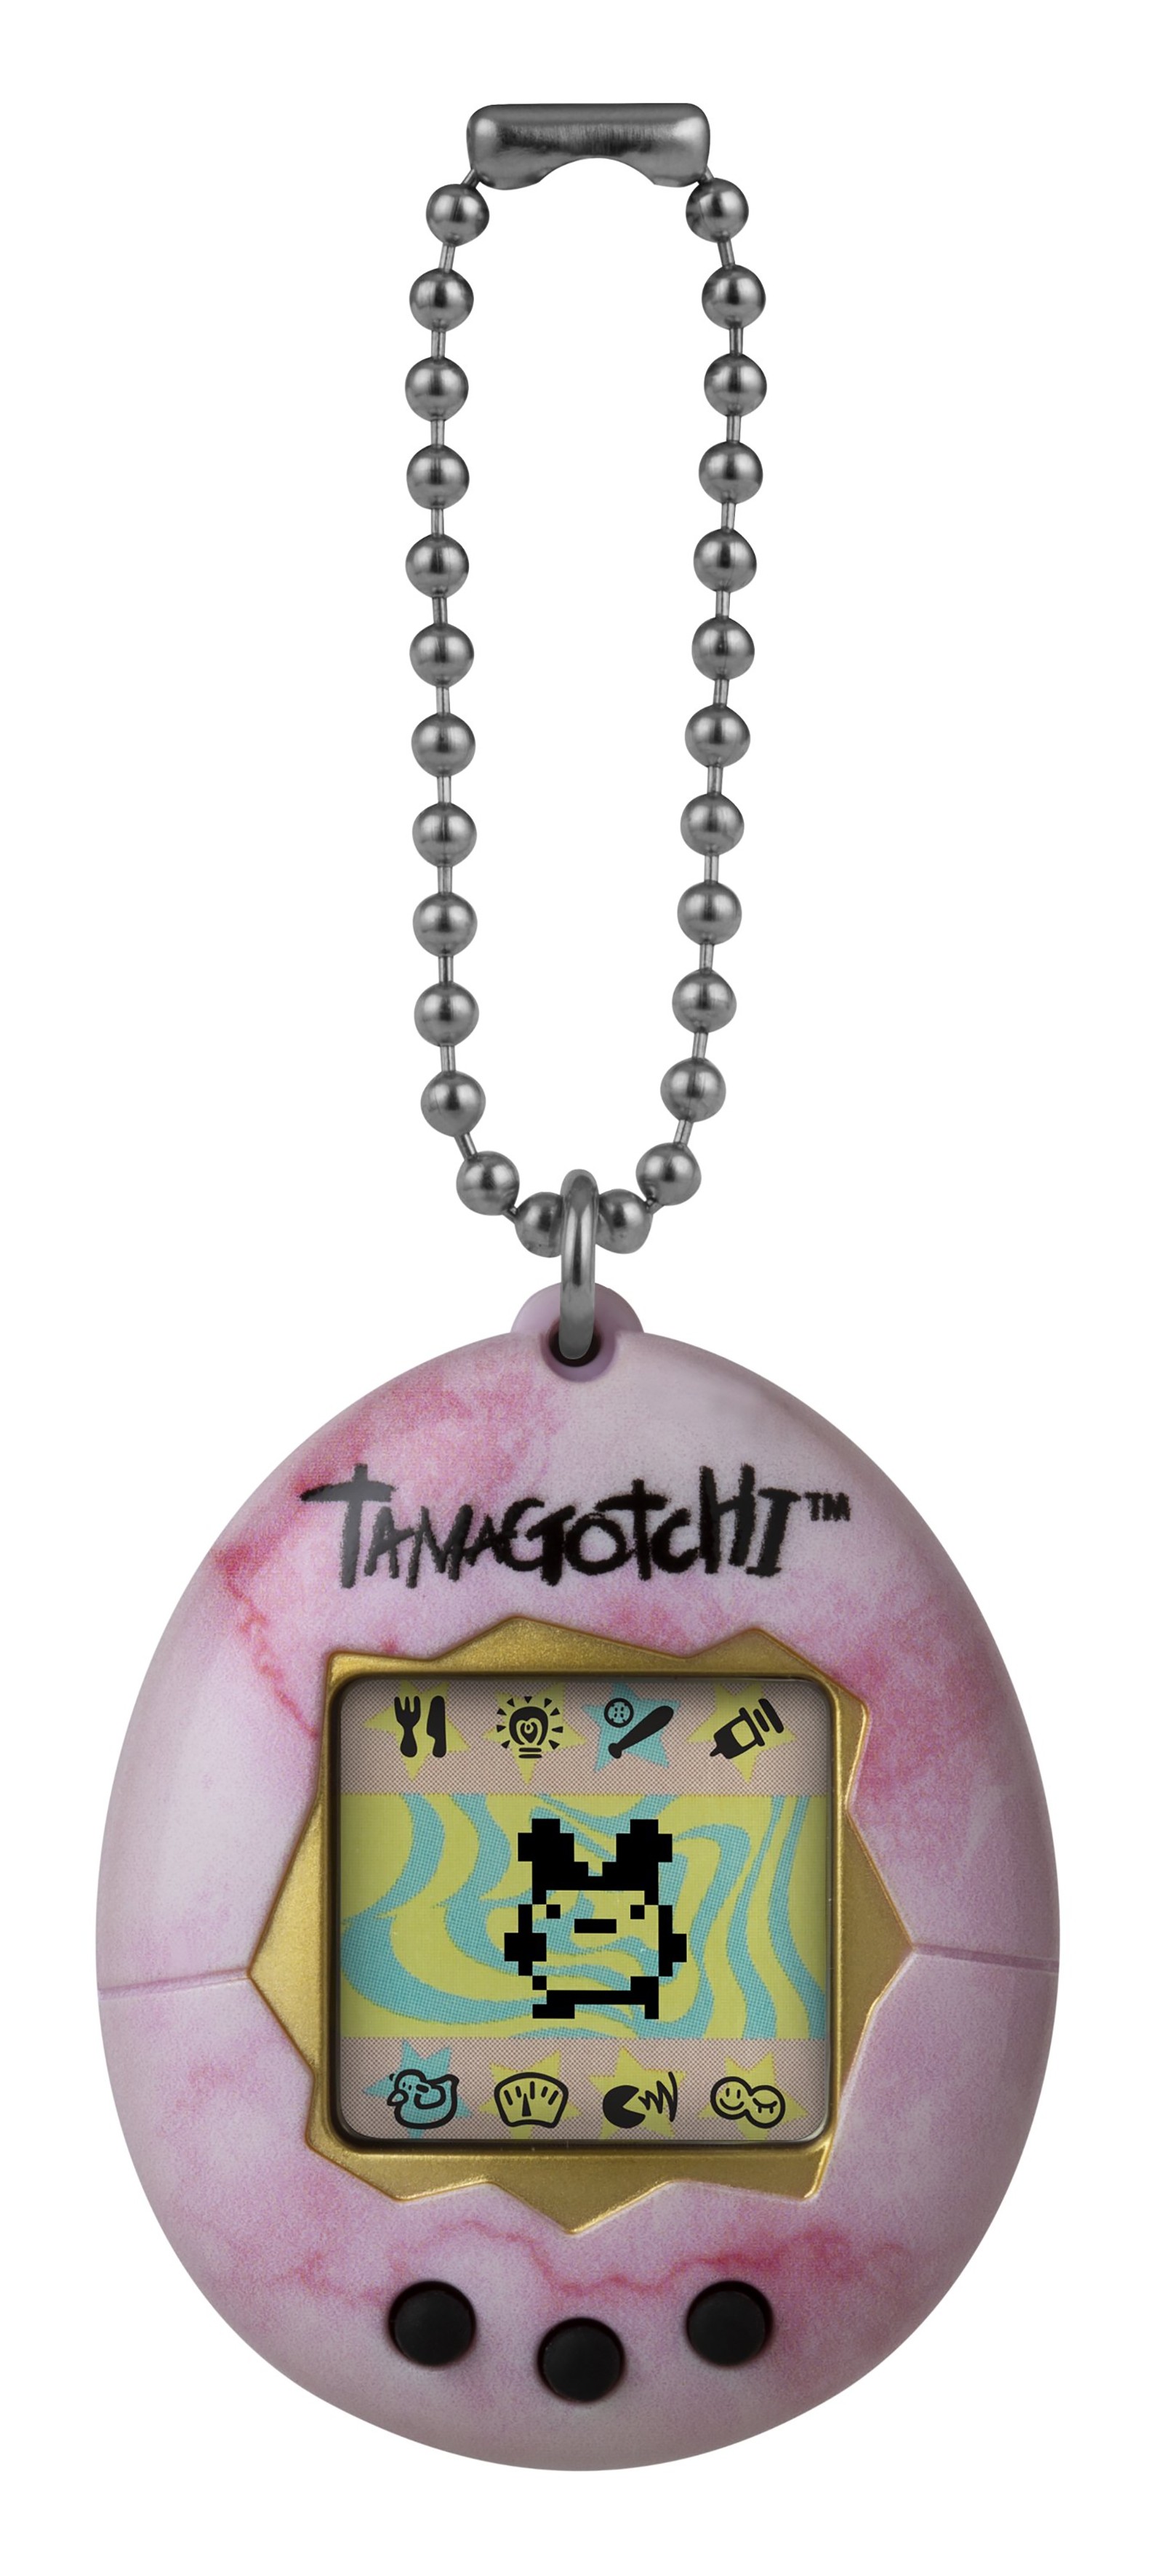 Tamagotchi Limited Edition Original Stone